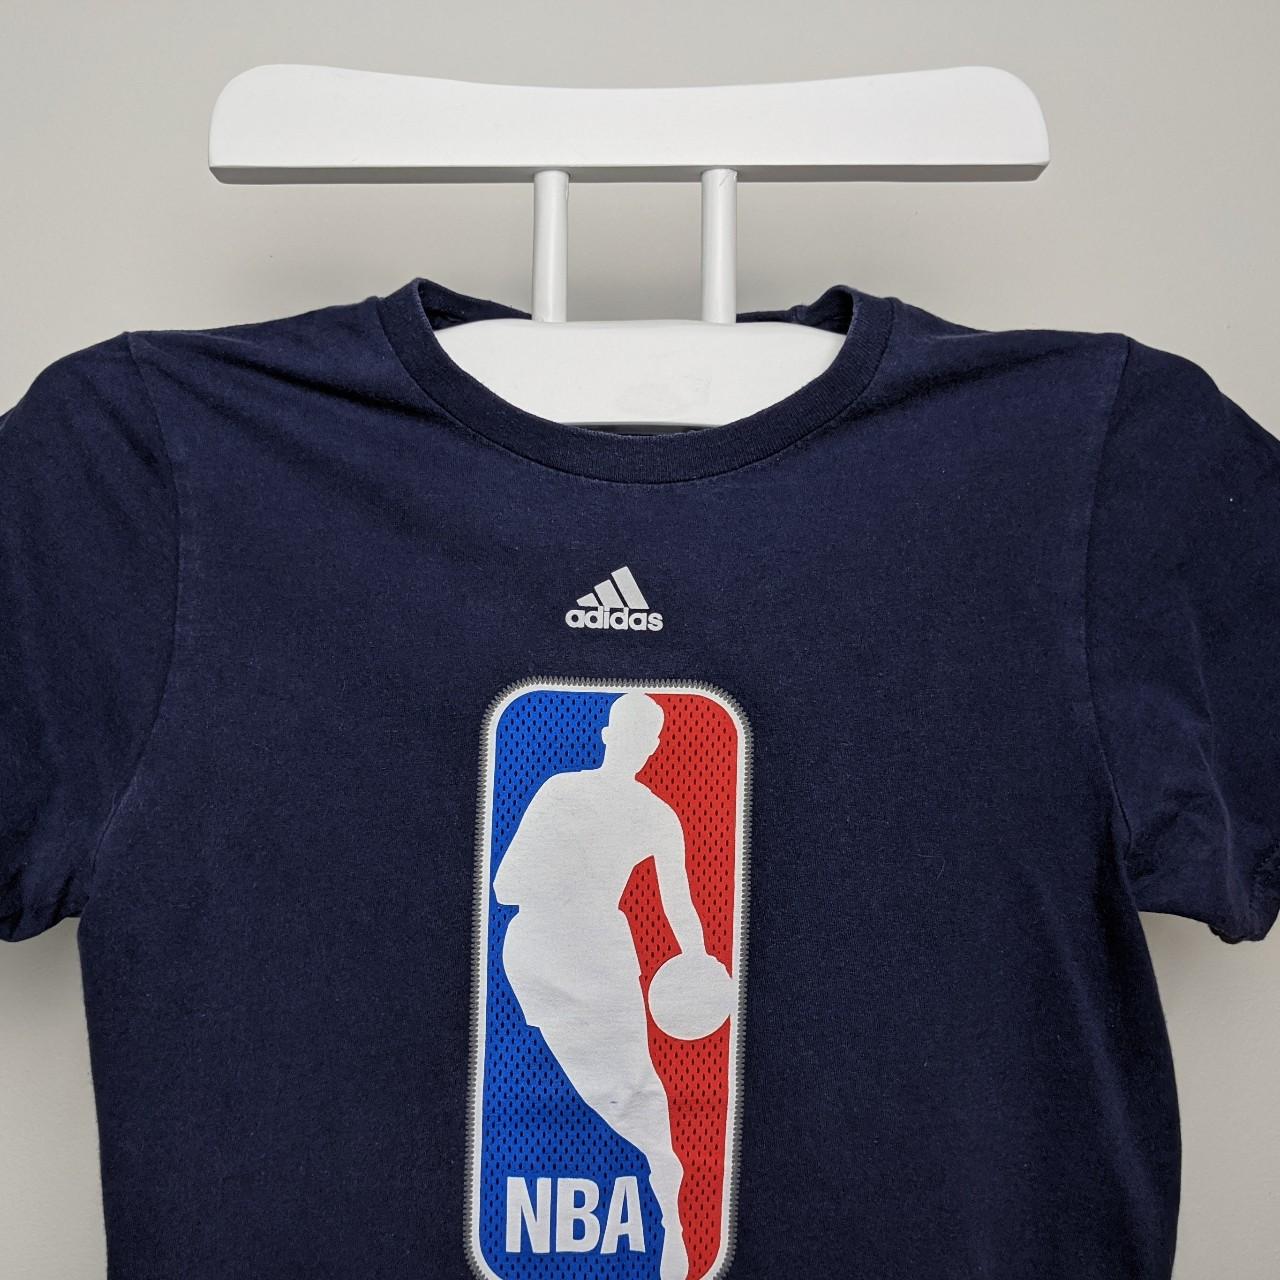 Adidas NBA Logo T-Shirt, Size M.